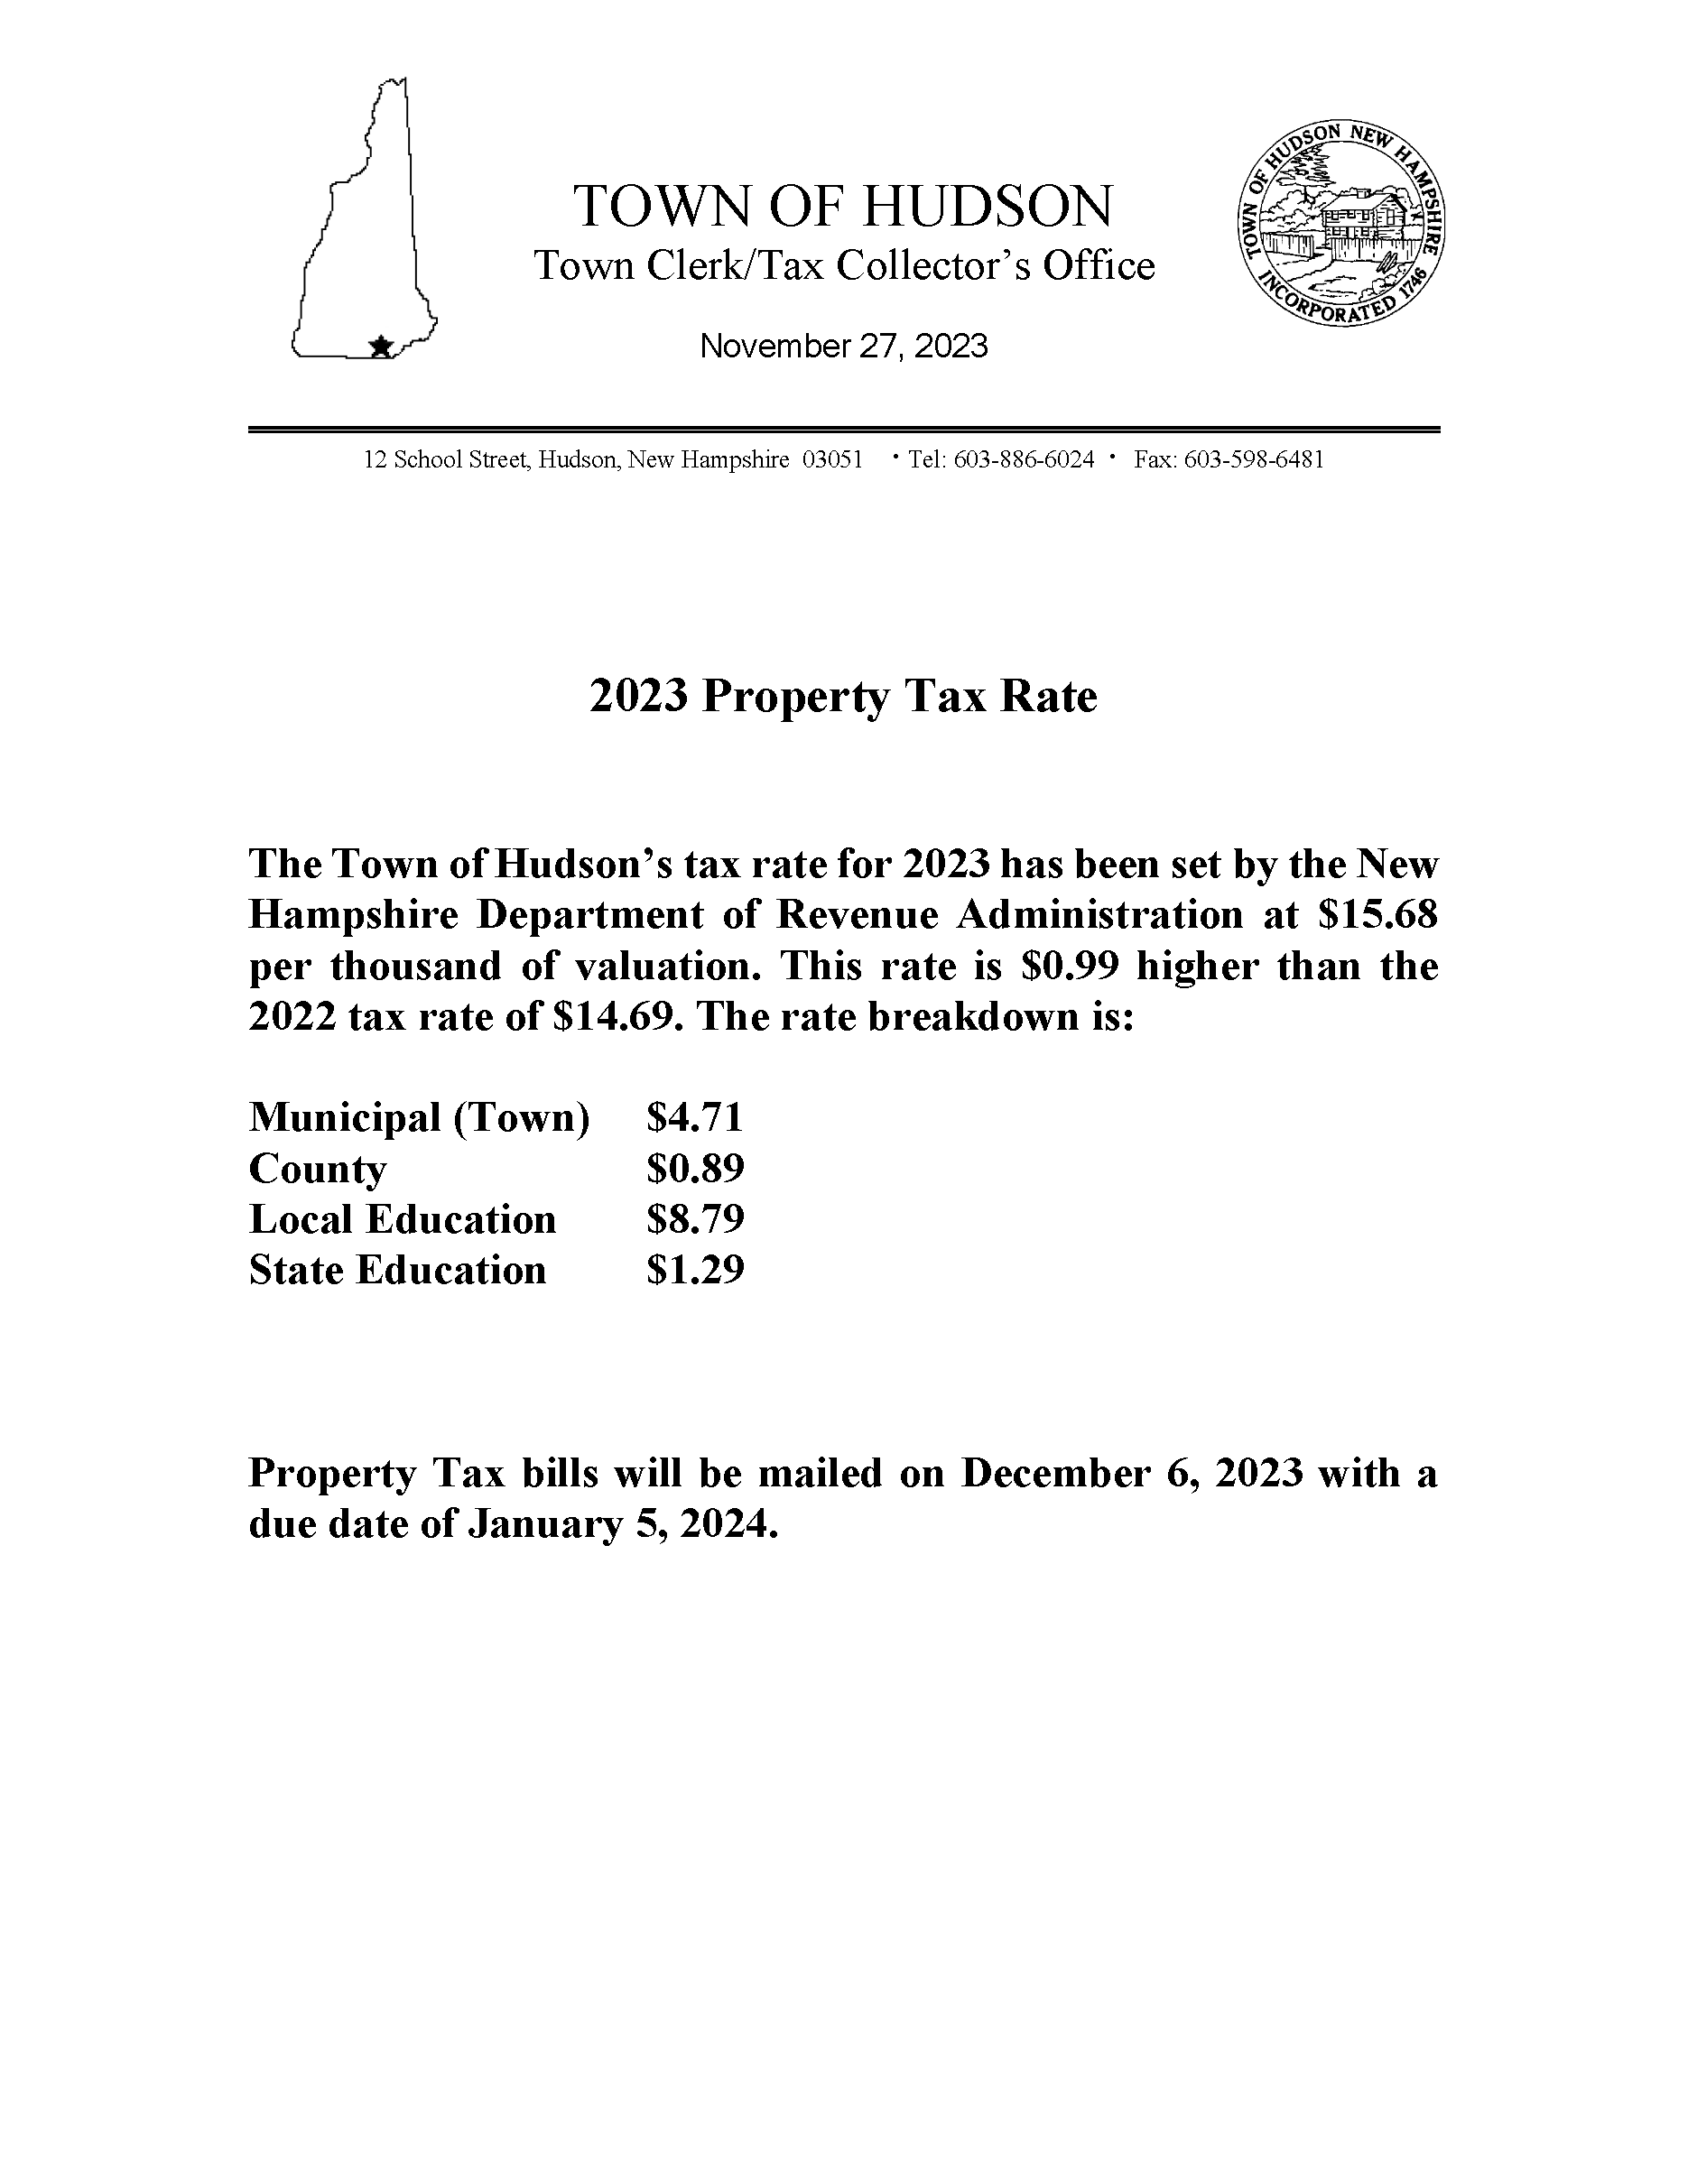 2023-tax-rate-hudson-new-hampshire